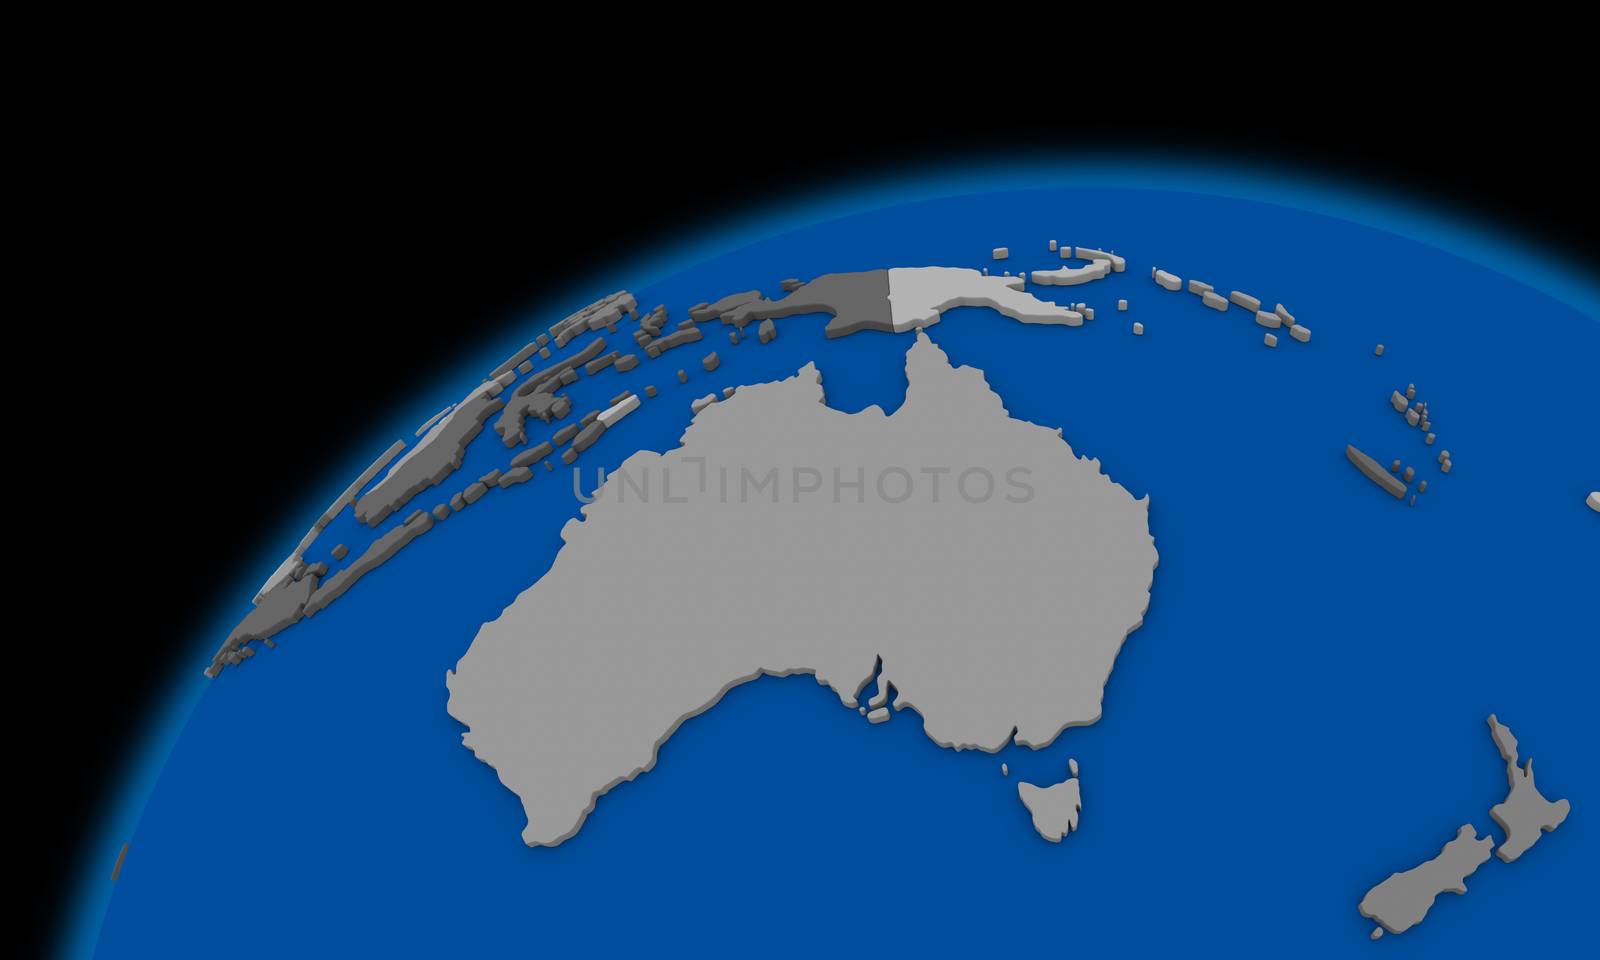 Australia on planet Earth, political map